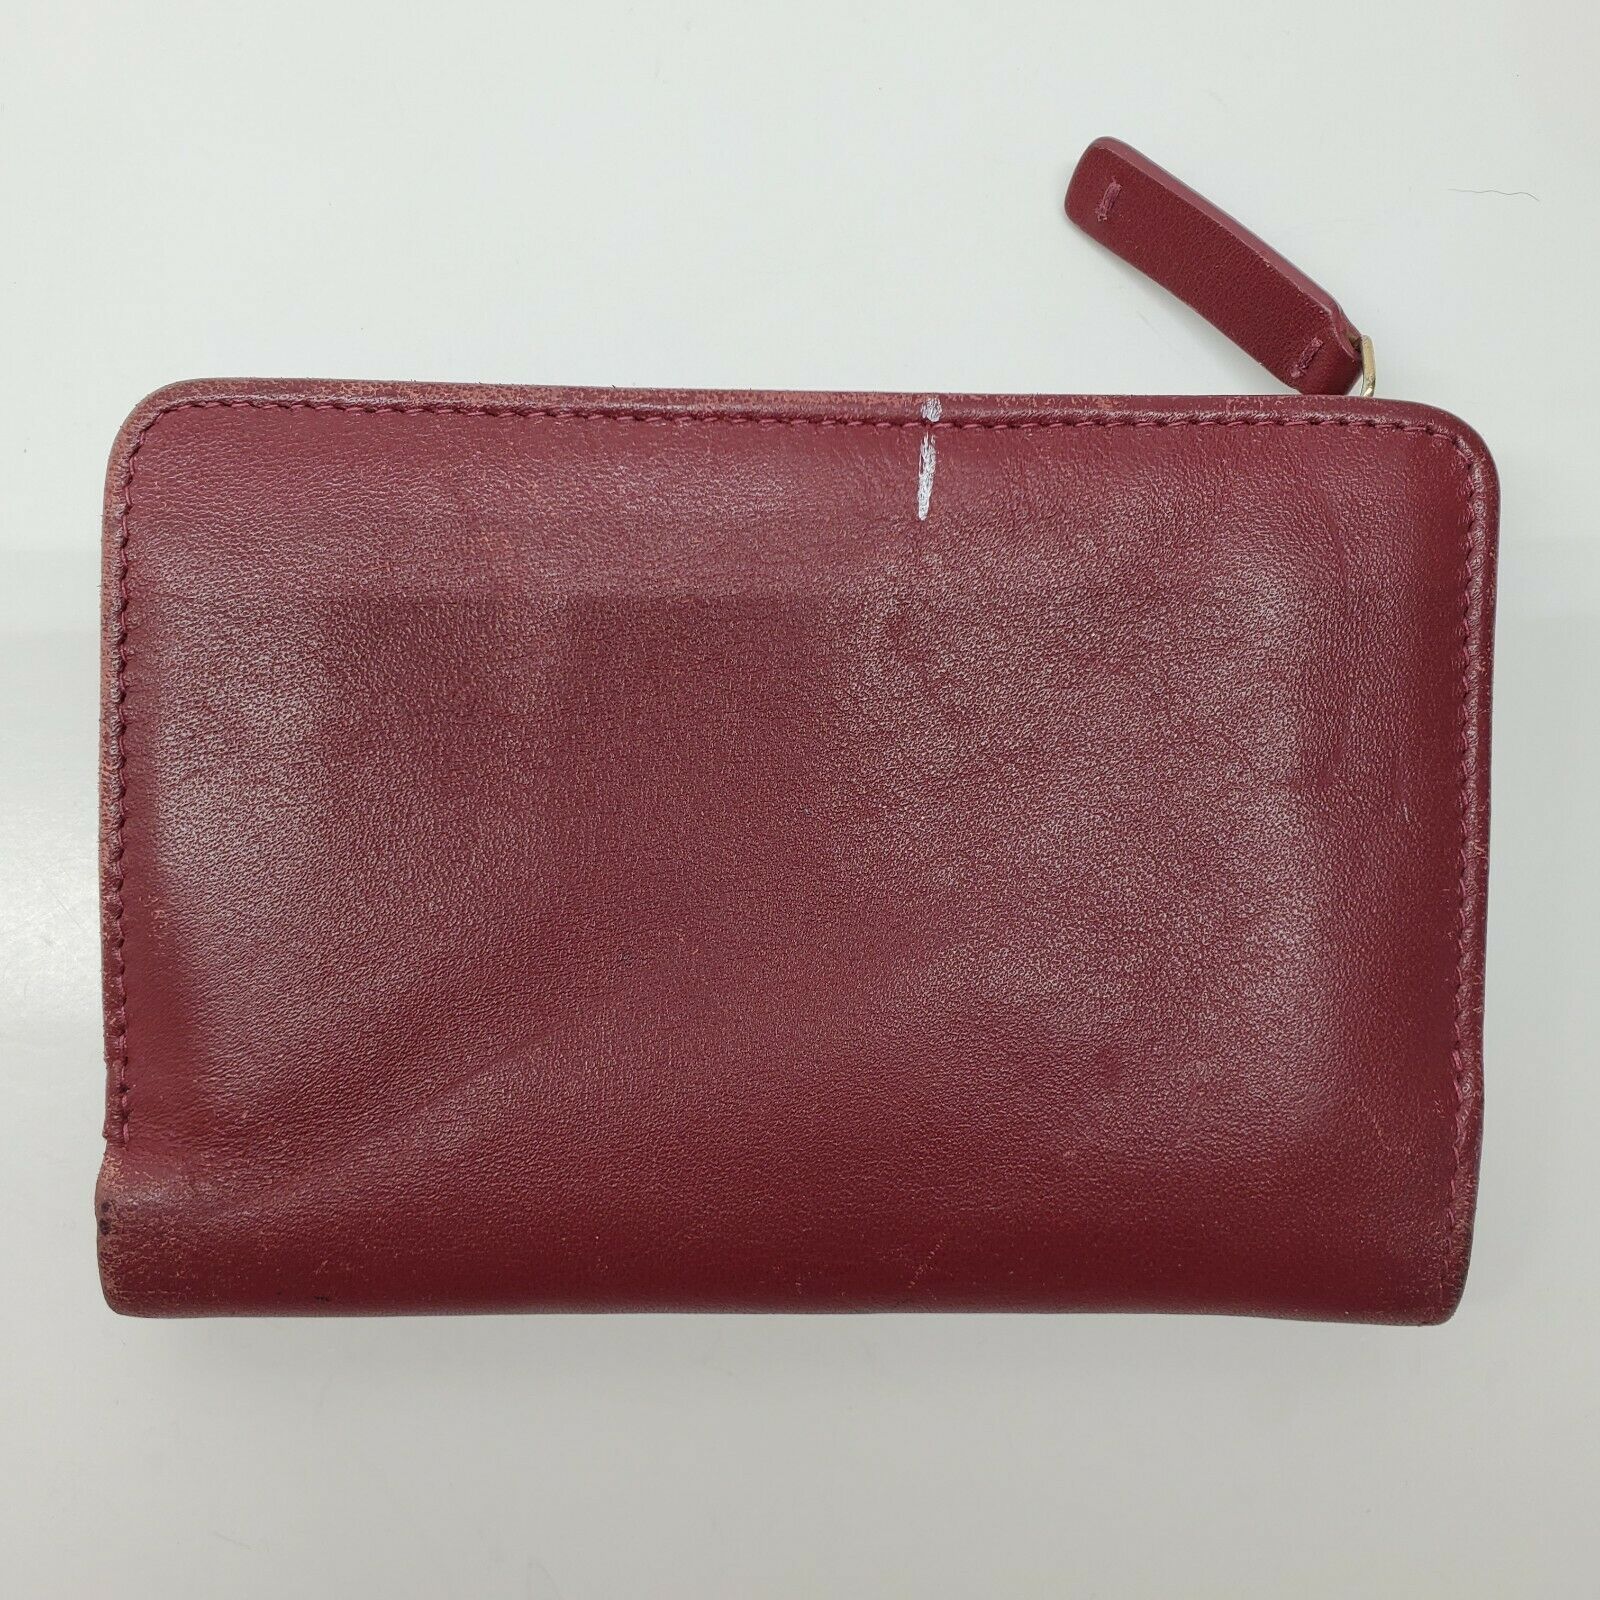 Radley London Zip Around Wallet Red Leather Clutch Purse - Women's Bags ...